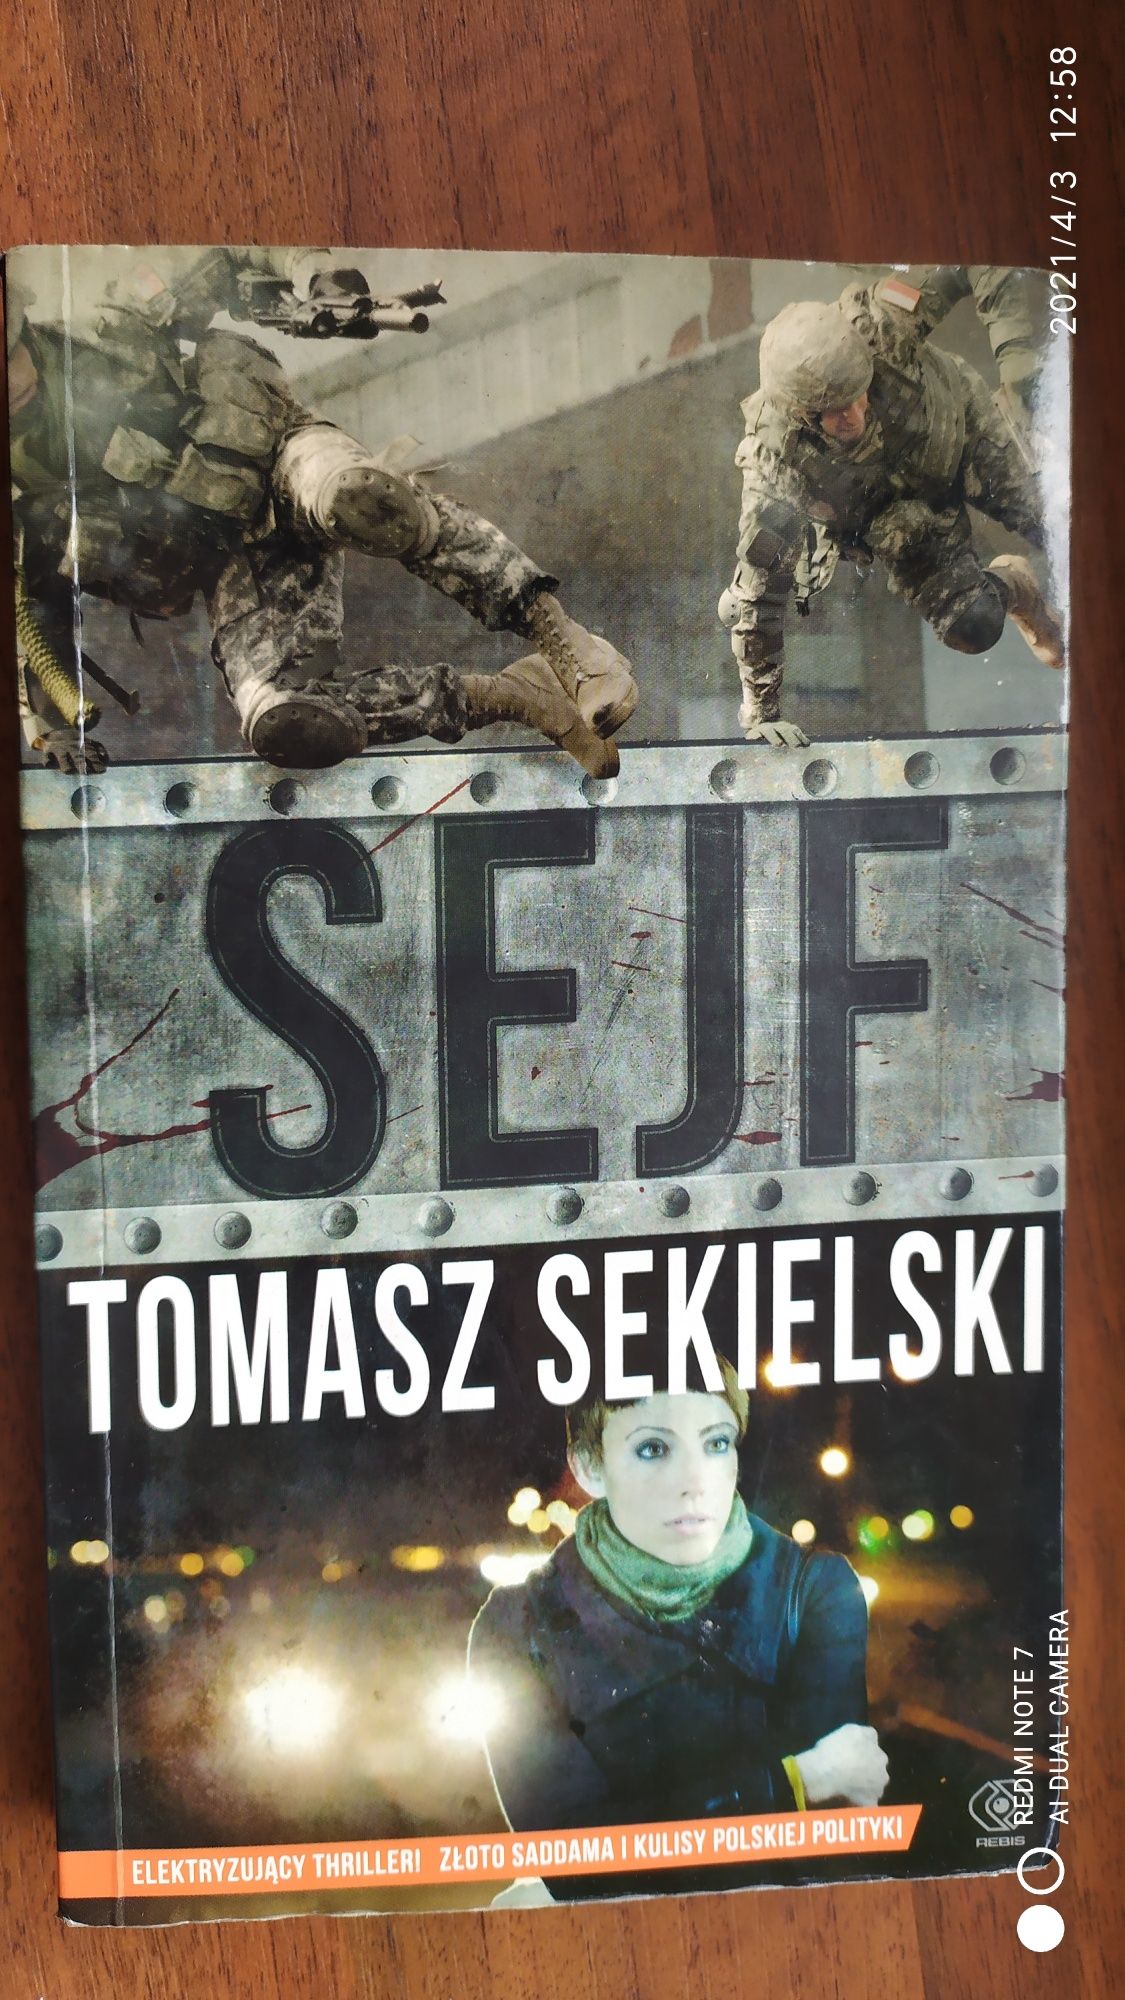 Tomasz Sekielski - Sejf książka